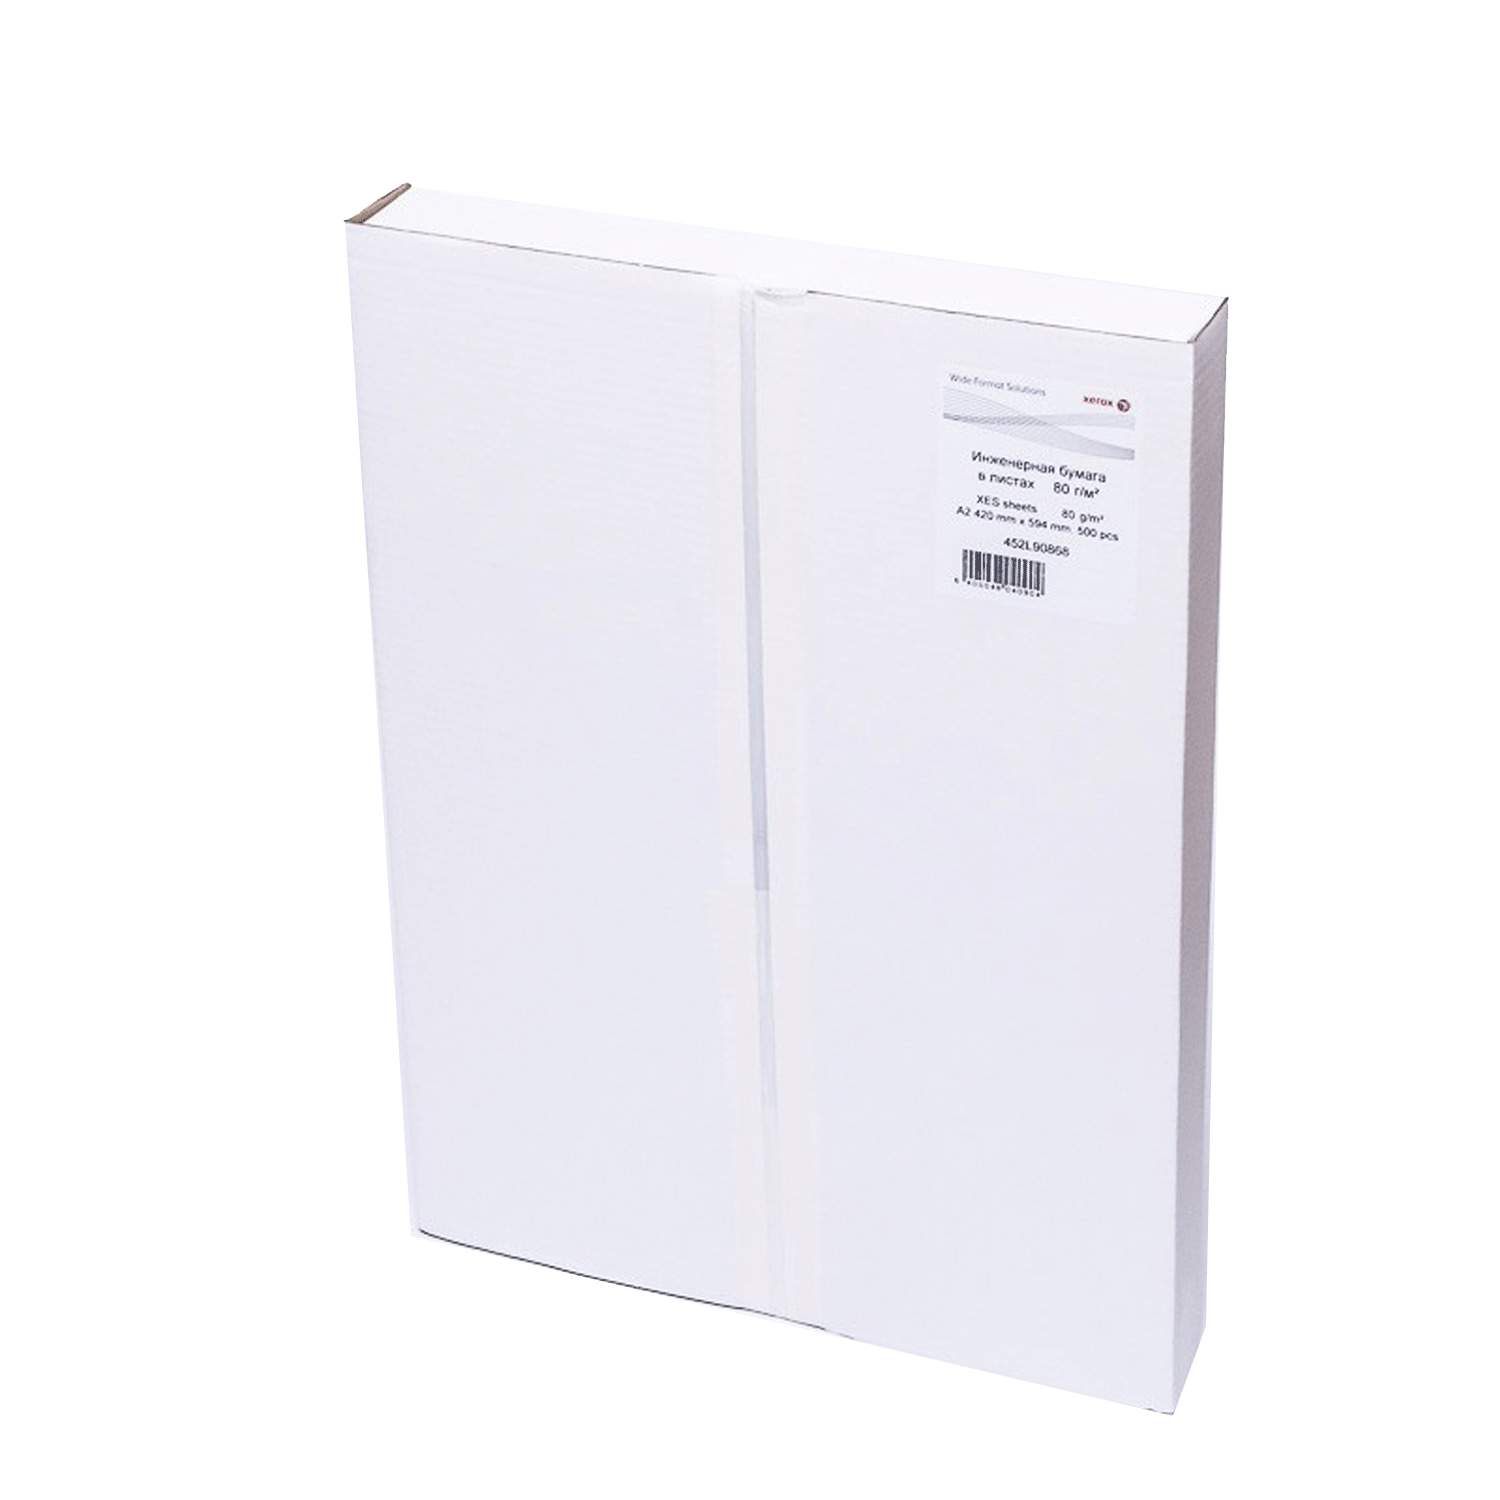 Бумага широкоформатная XEROX 110522 XES А2, инженерная, 500 листов, 80 гр/м2, 168% CIE